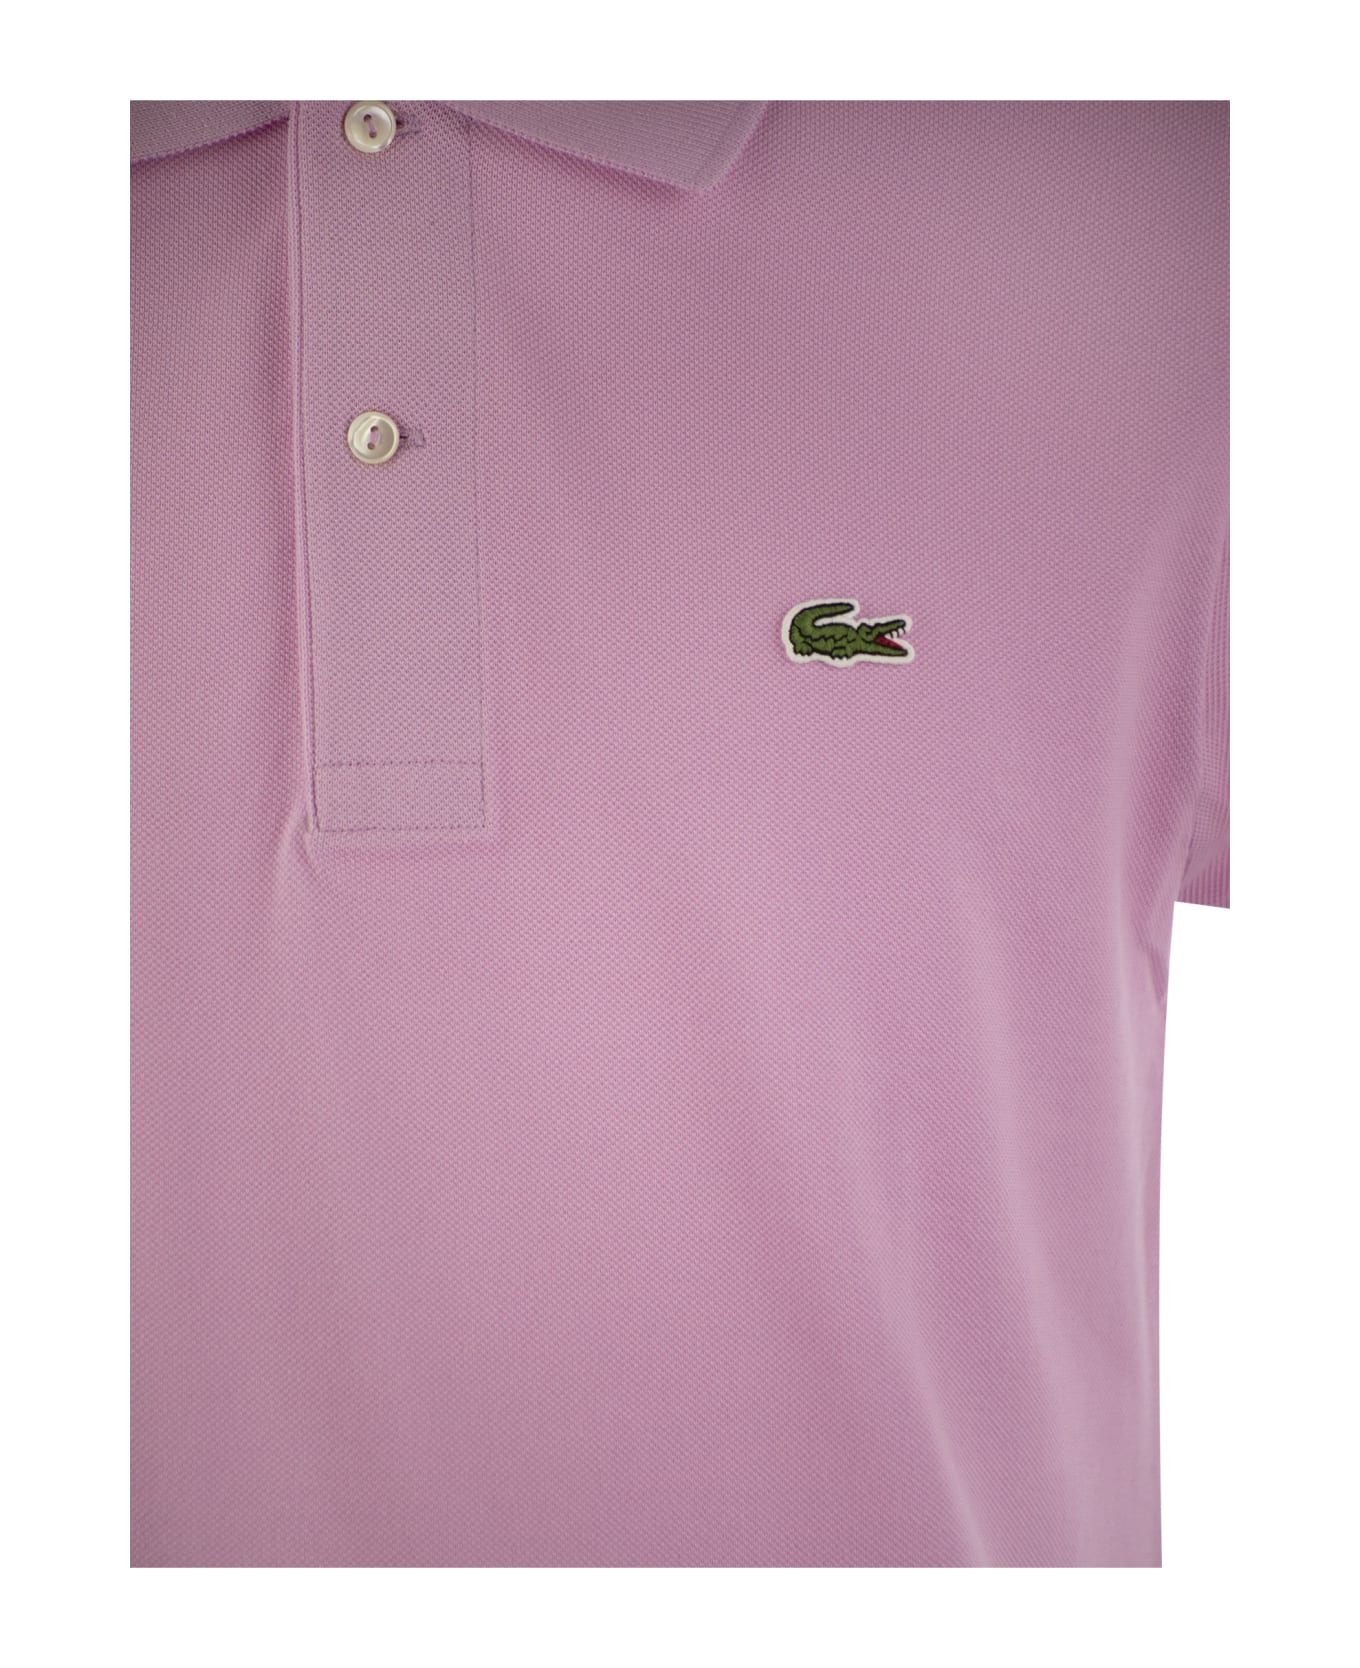 Lacoste Classic Fit Cotton Pique Polo Shirt - Pink ポロシャツ